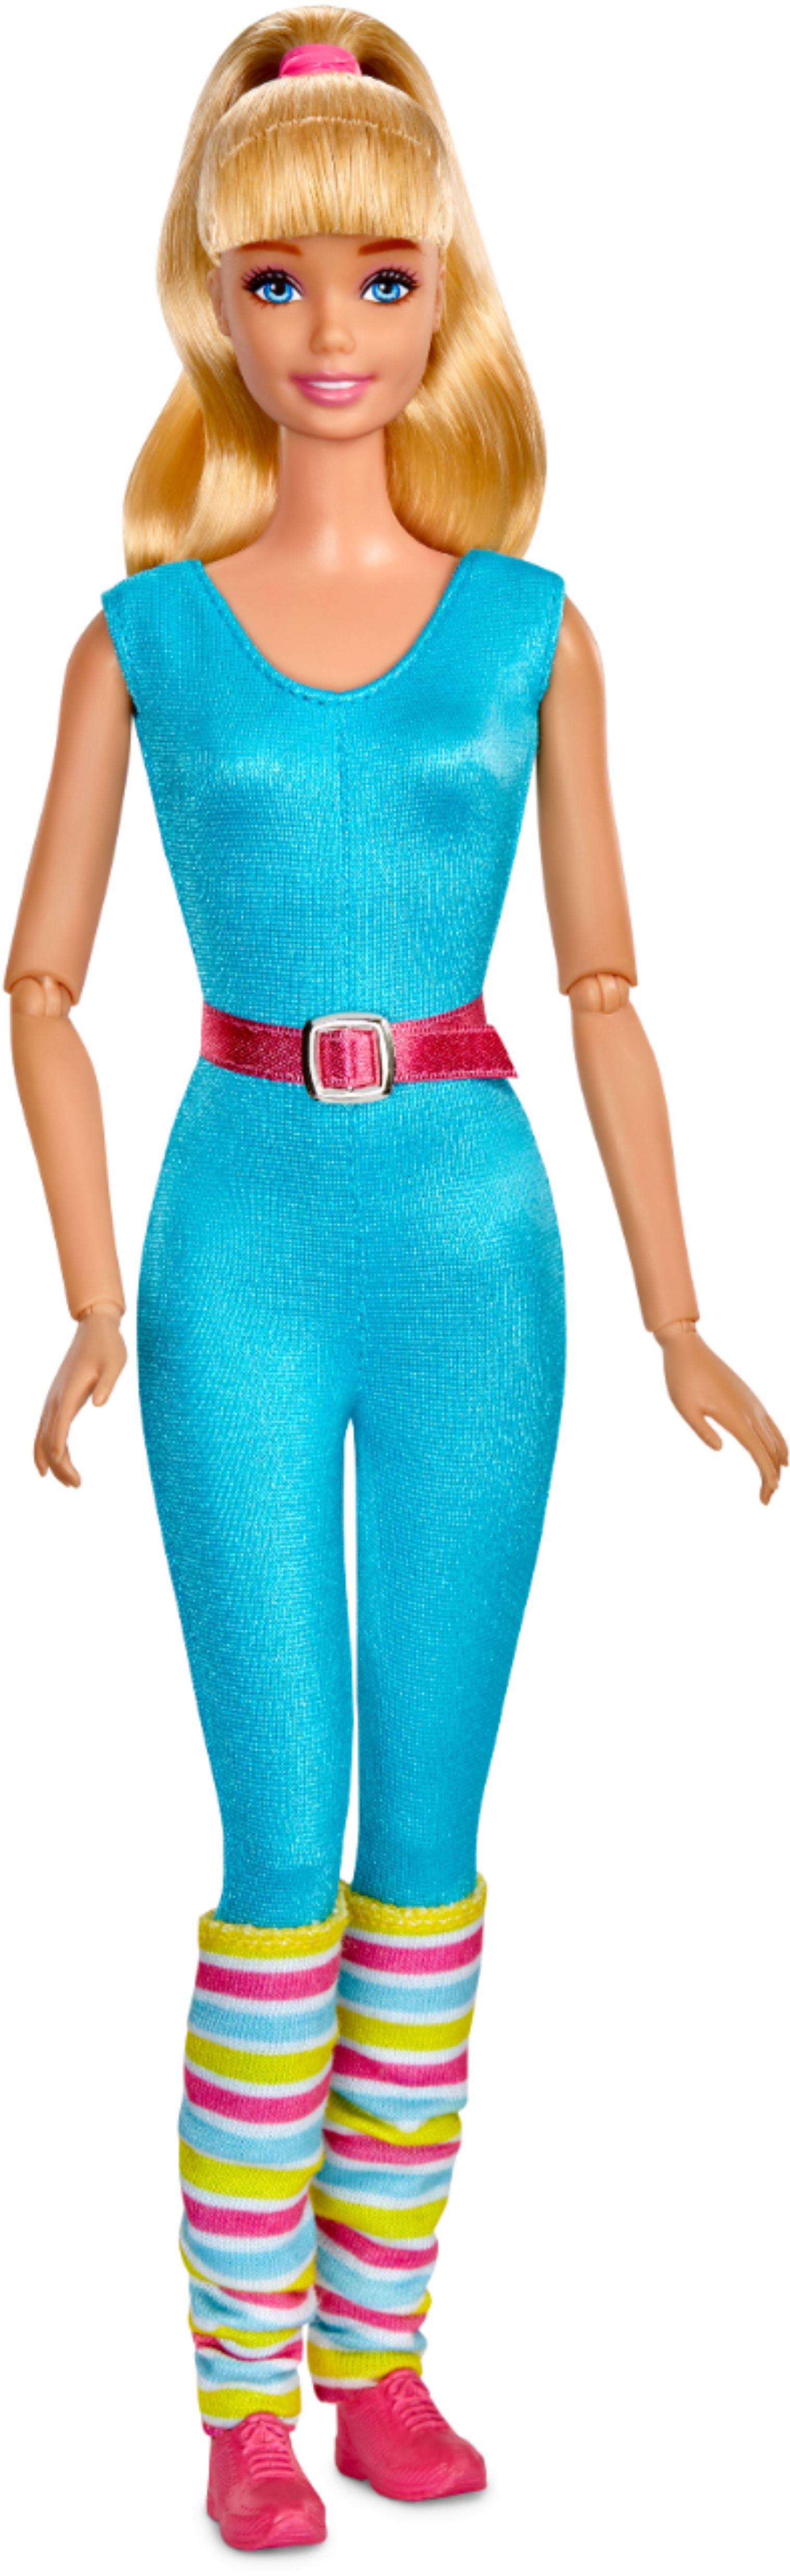 barbie doll blue